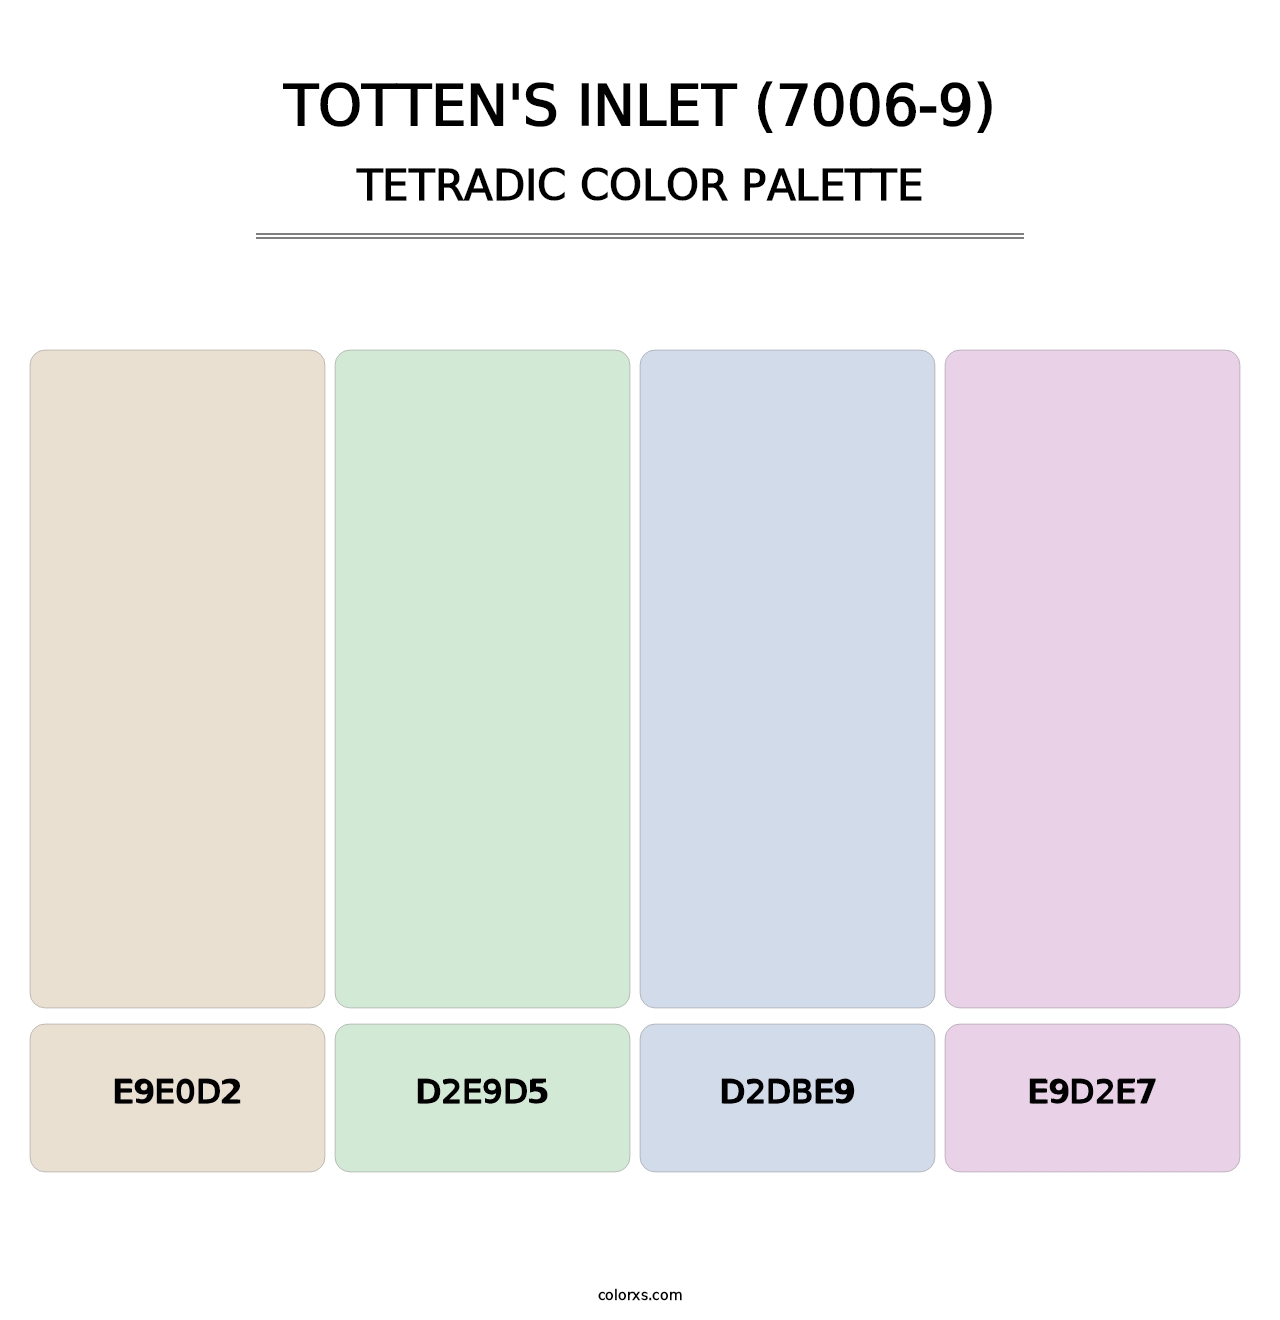 Totten's Inlet (7006-9) - Tetradic Color Palette